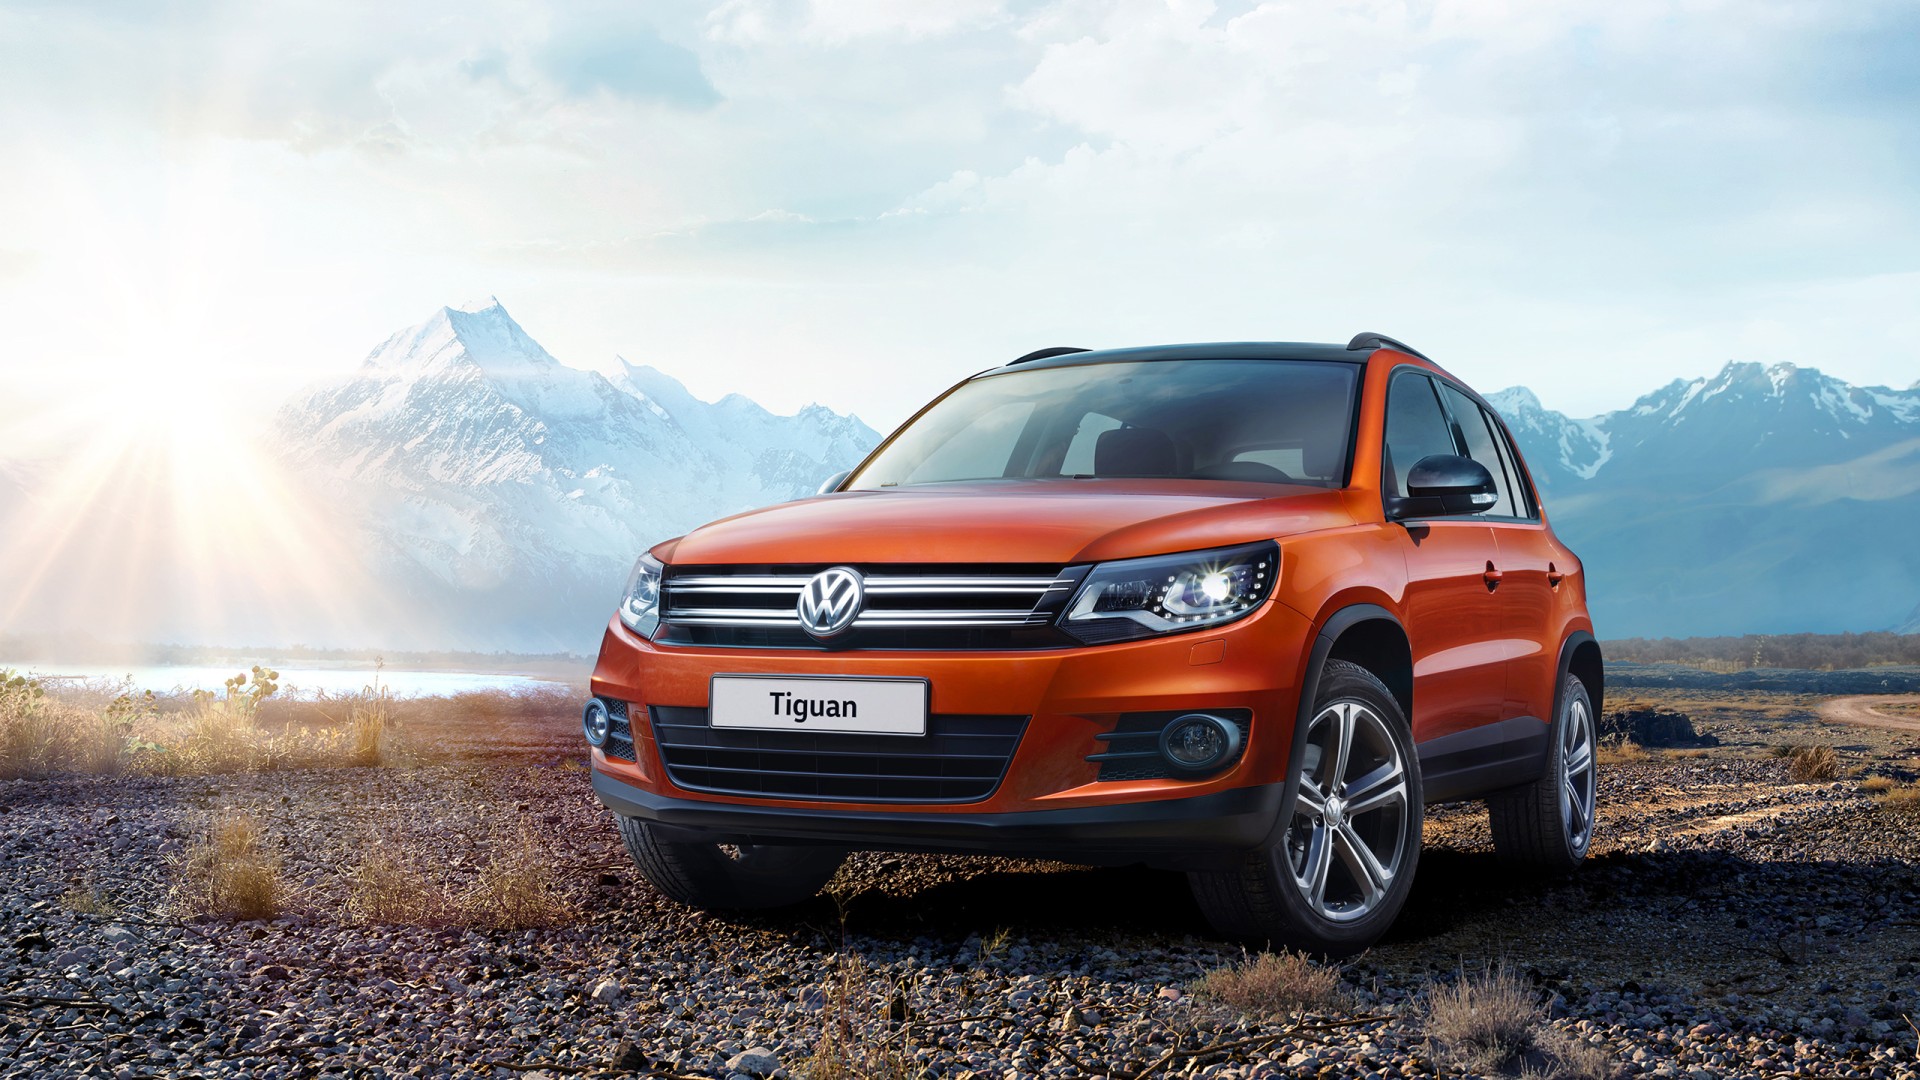 2016 Volkswagen Tiguan SUV Wallpaper | HD Car Wallpapers